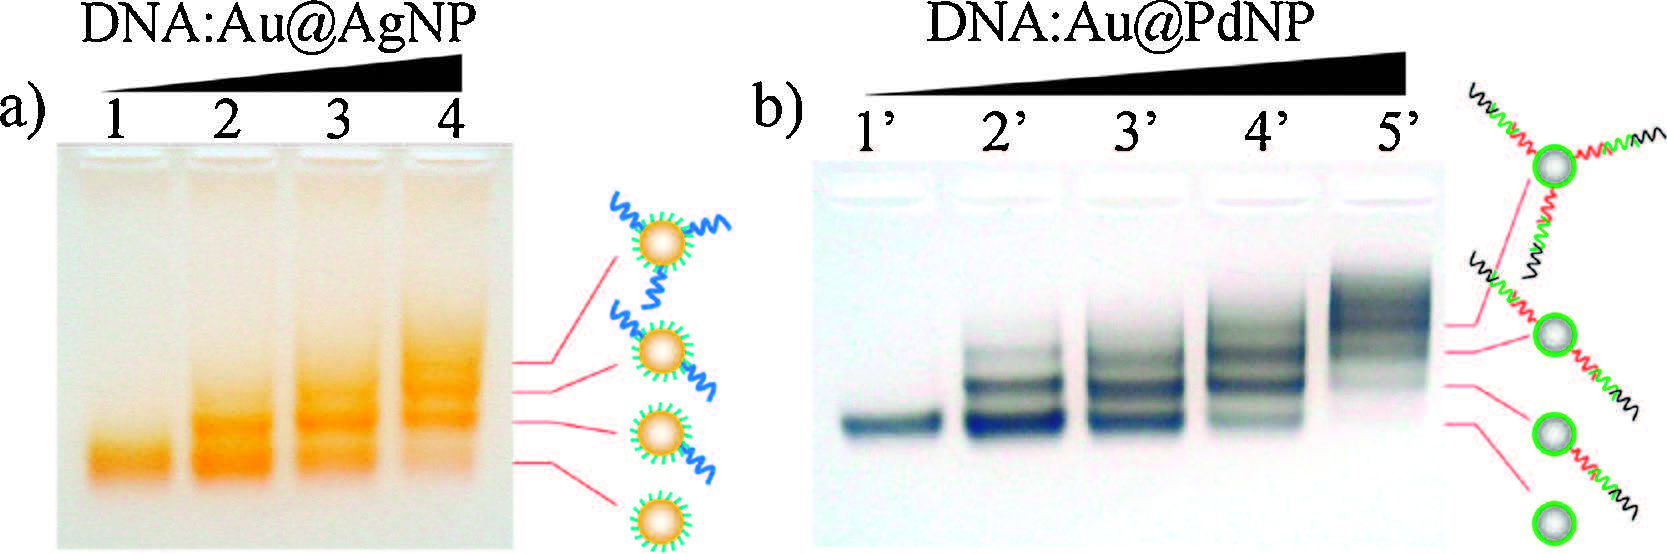 Gel electrophoresis as a nanoseparation tool serving DNA 